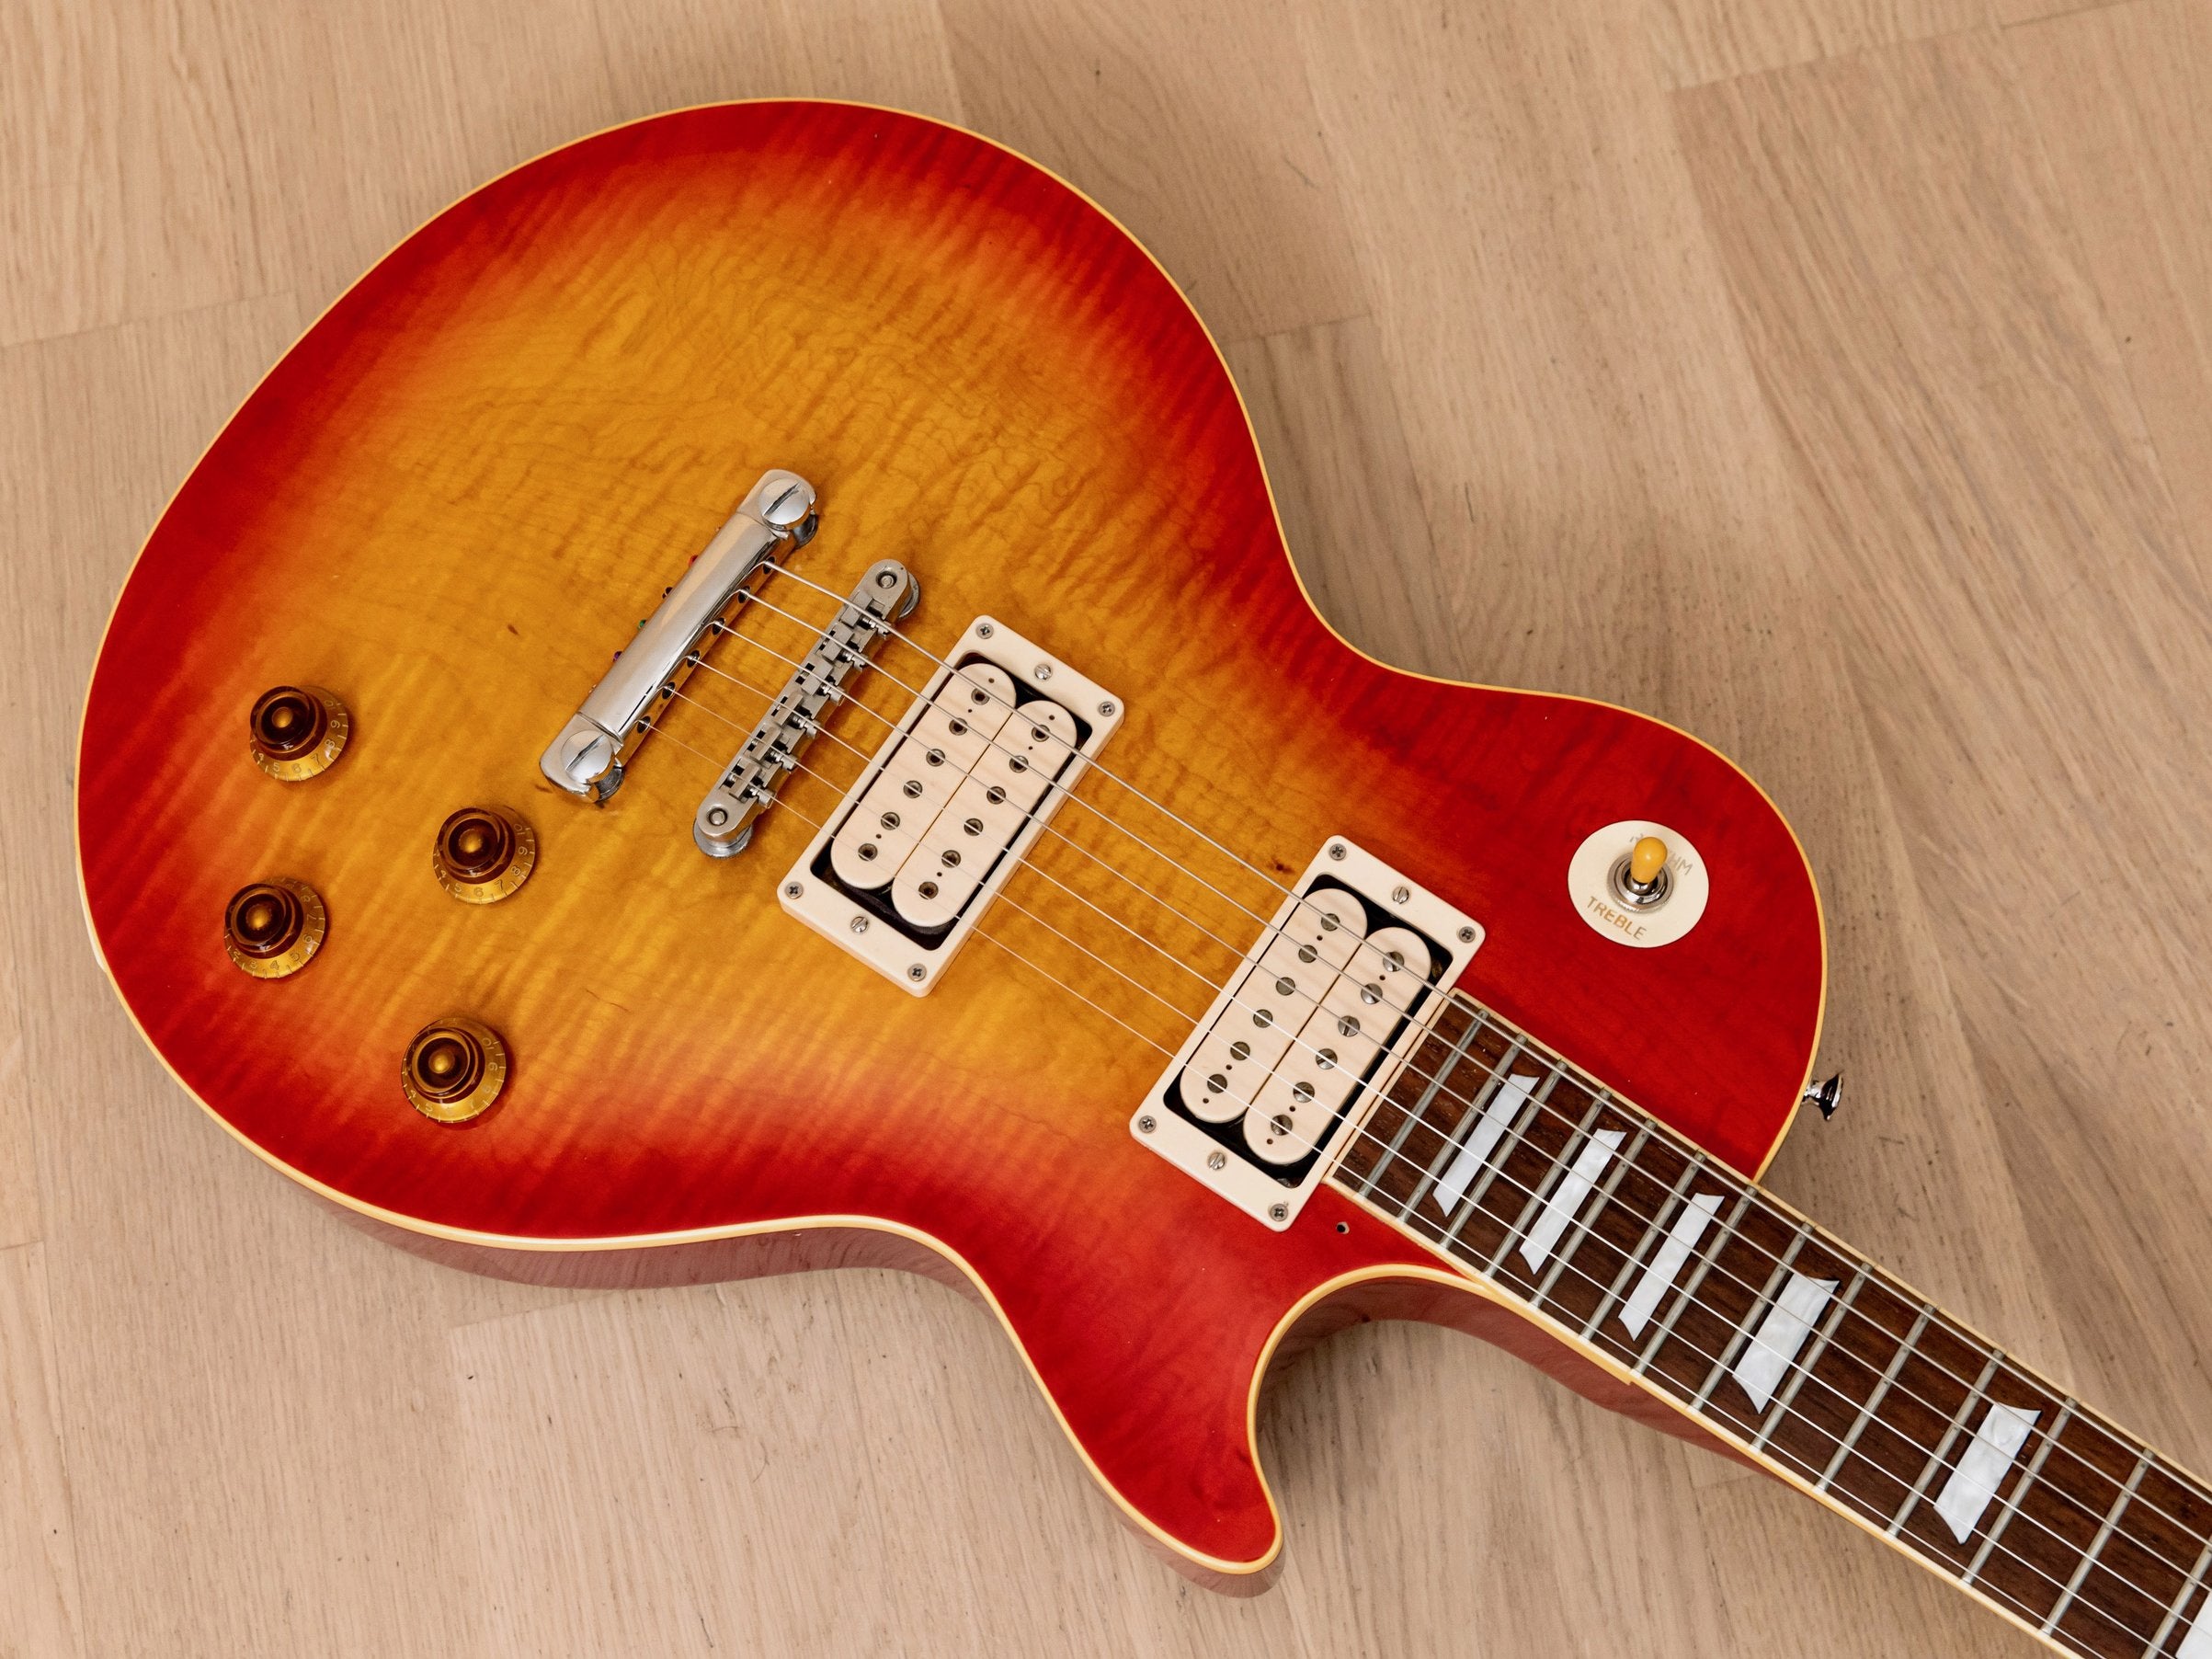 1983 Tokai Love Rock LS100 Flame Top Vintage Electric Guitar Cherry Sunburst w/ USA Dimarzios, Case